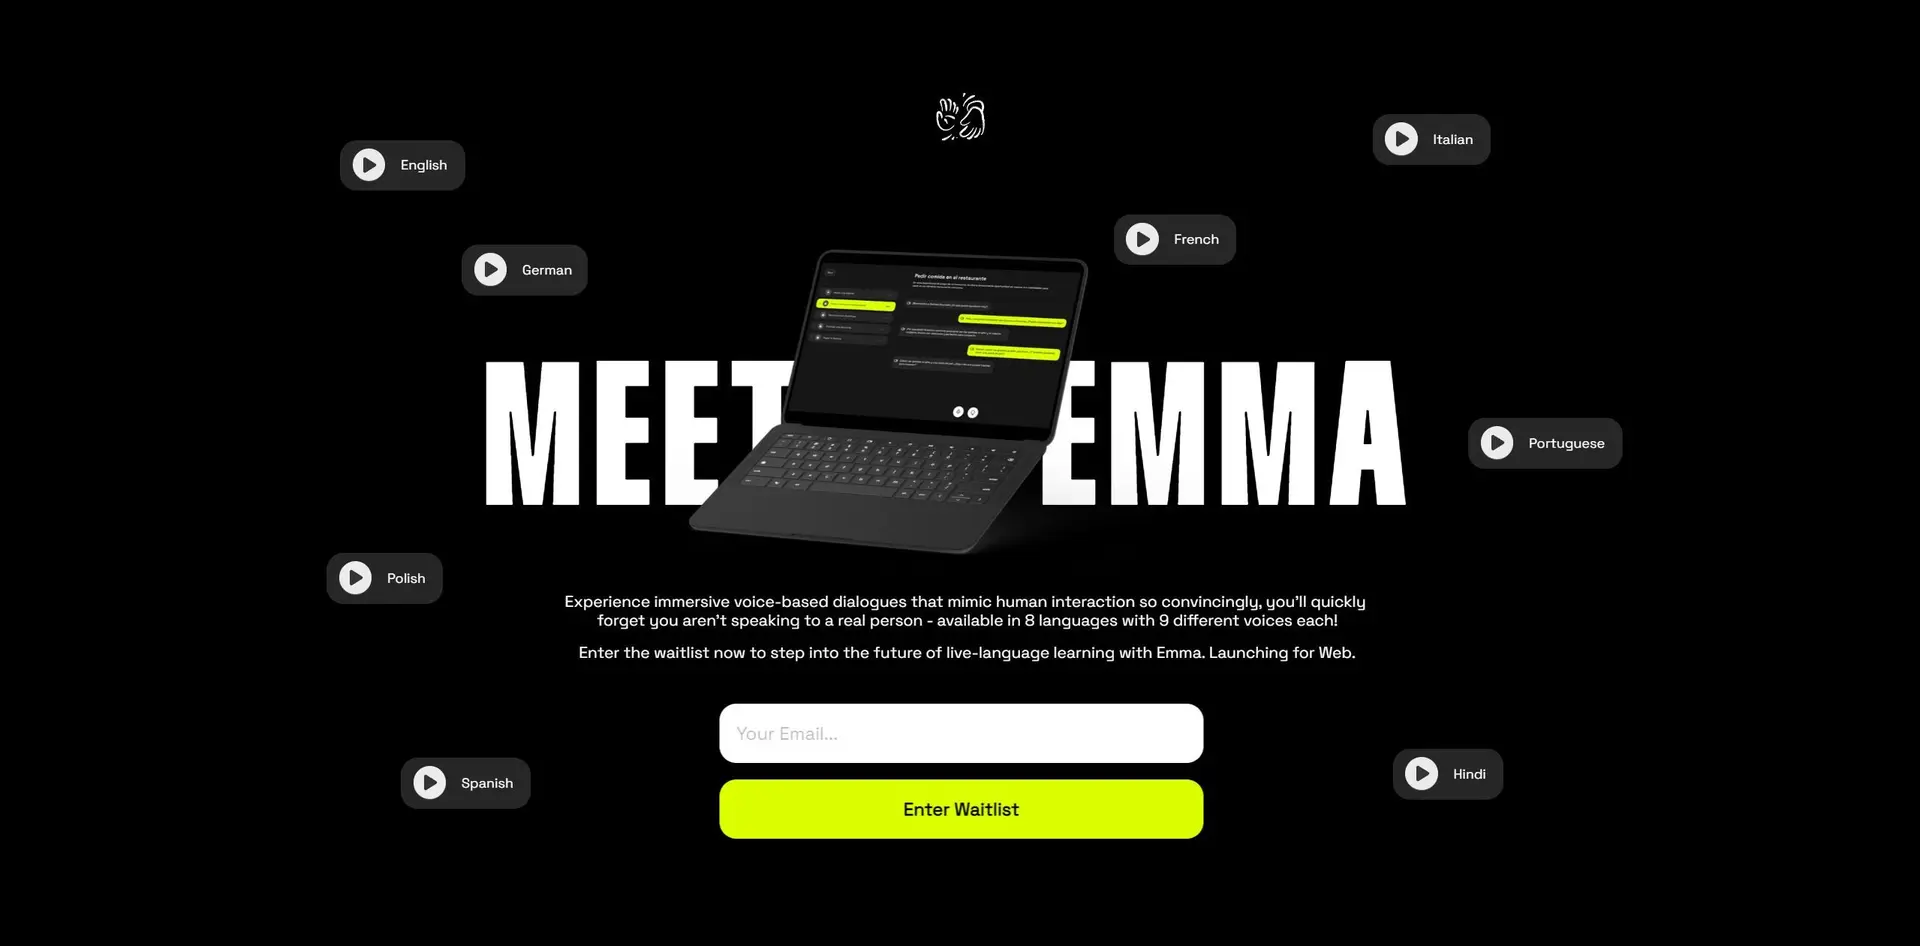 Emmawebsite picture